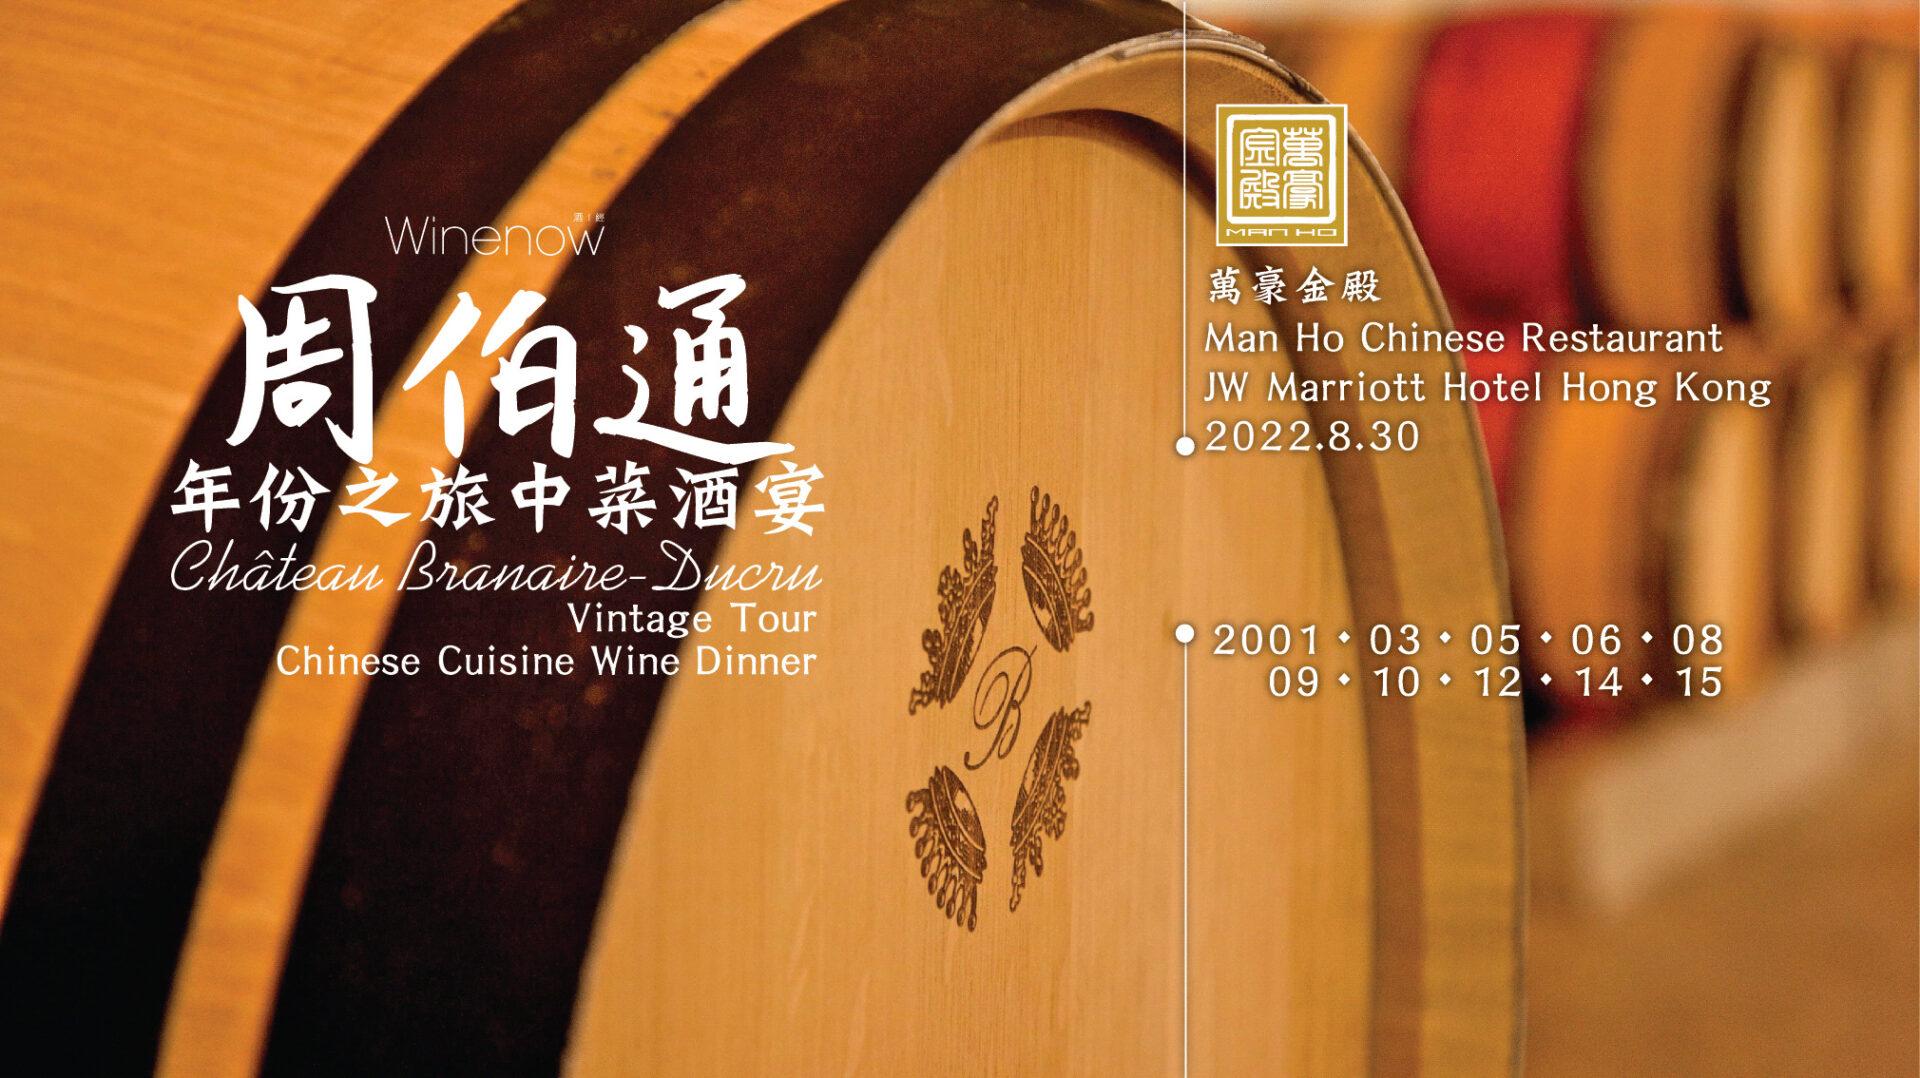 【full】周伯通年份之旅中菜酒宴 Château Branaire-Ducru Vintage Tour Chinese Cuisine Wine Dinner - WineNow HK